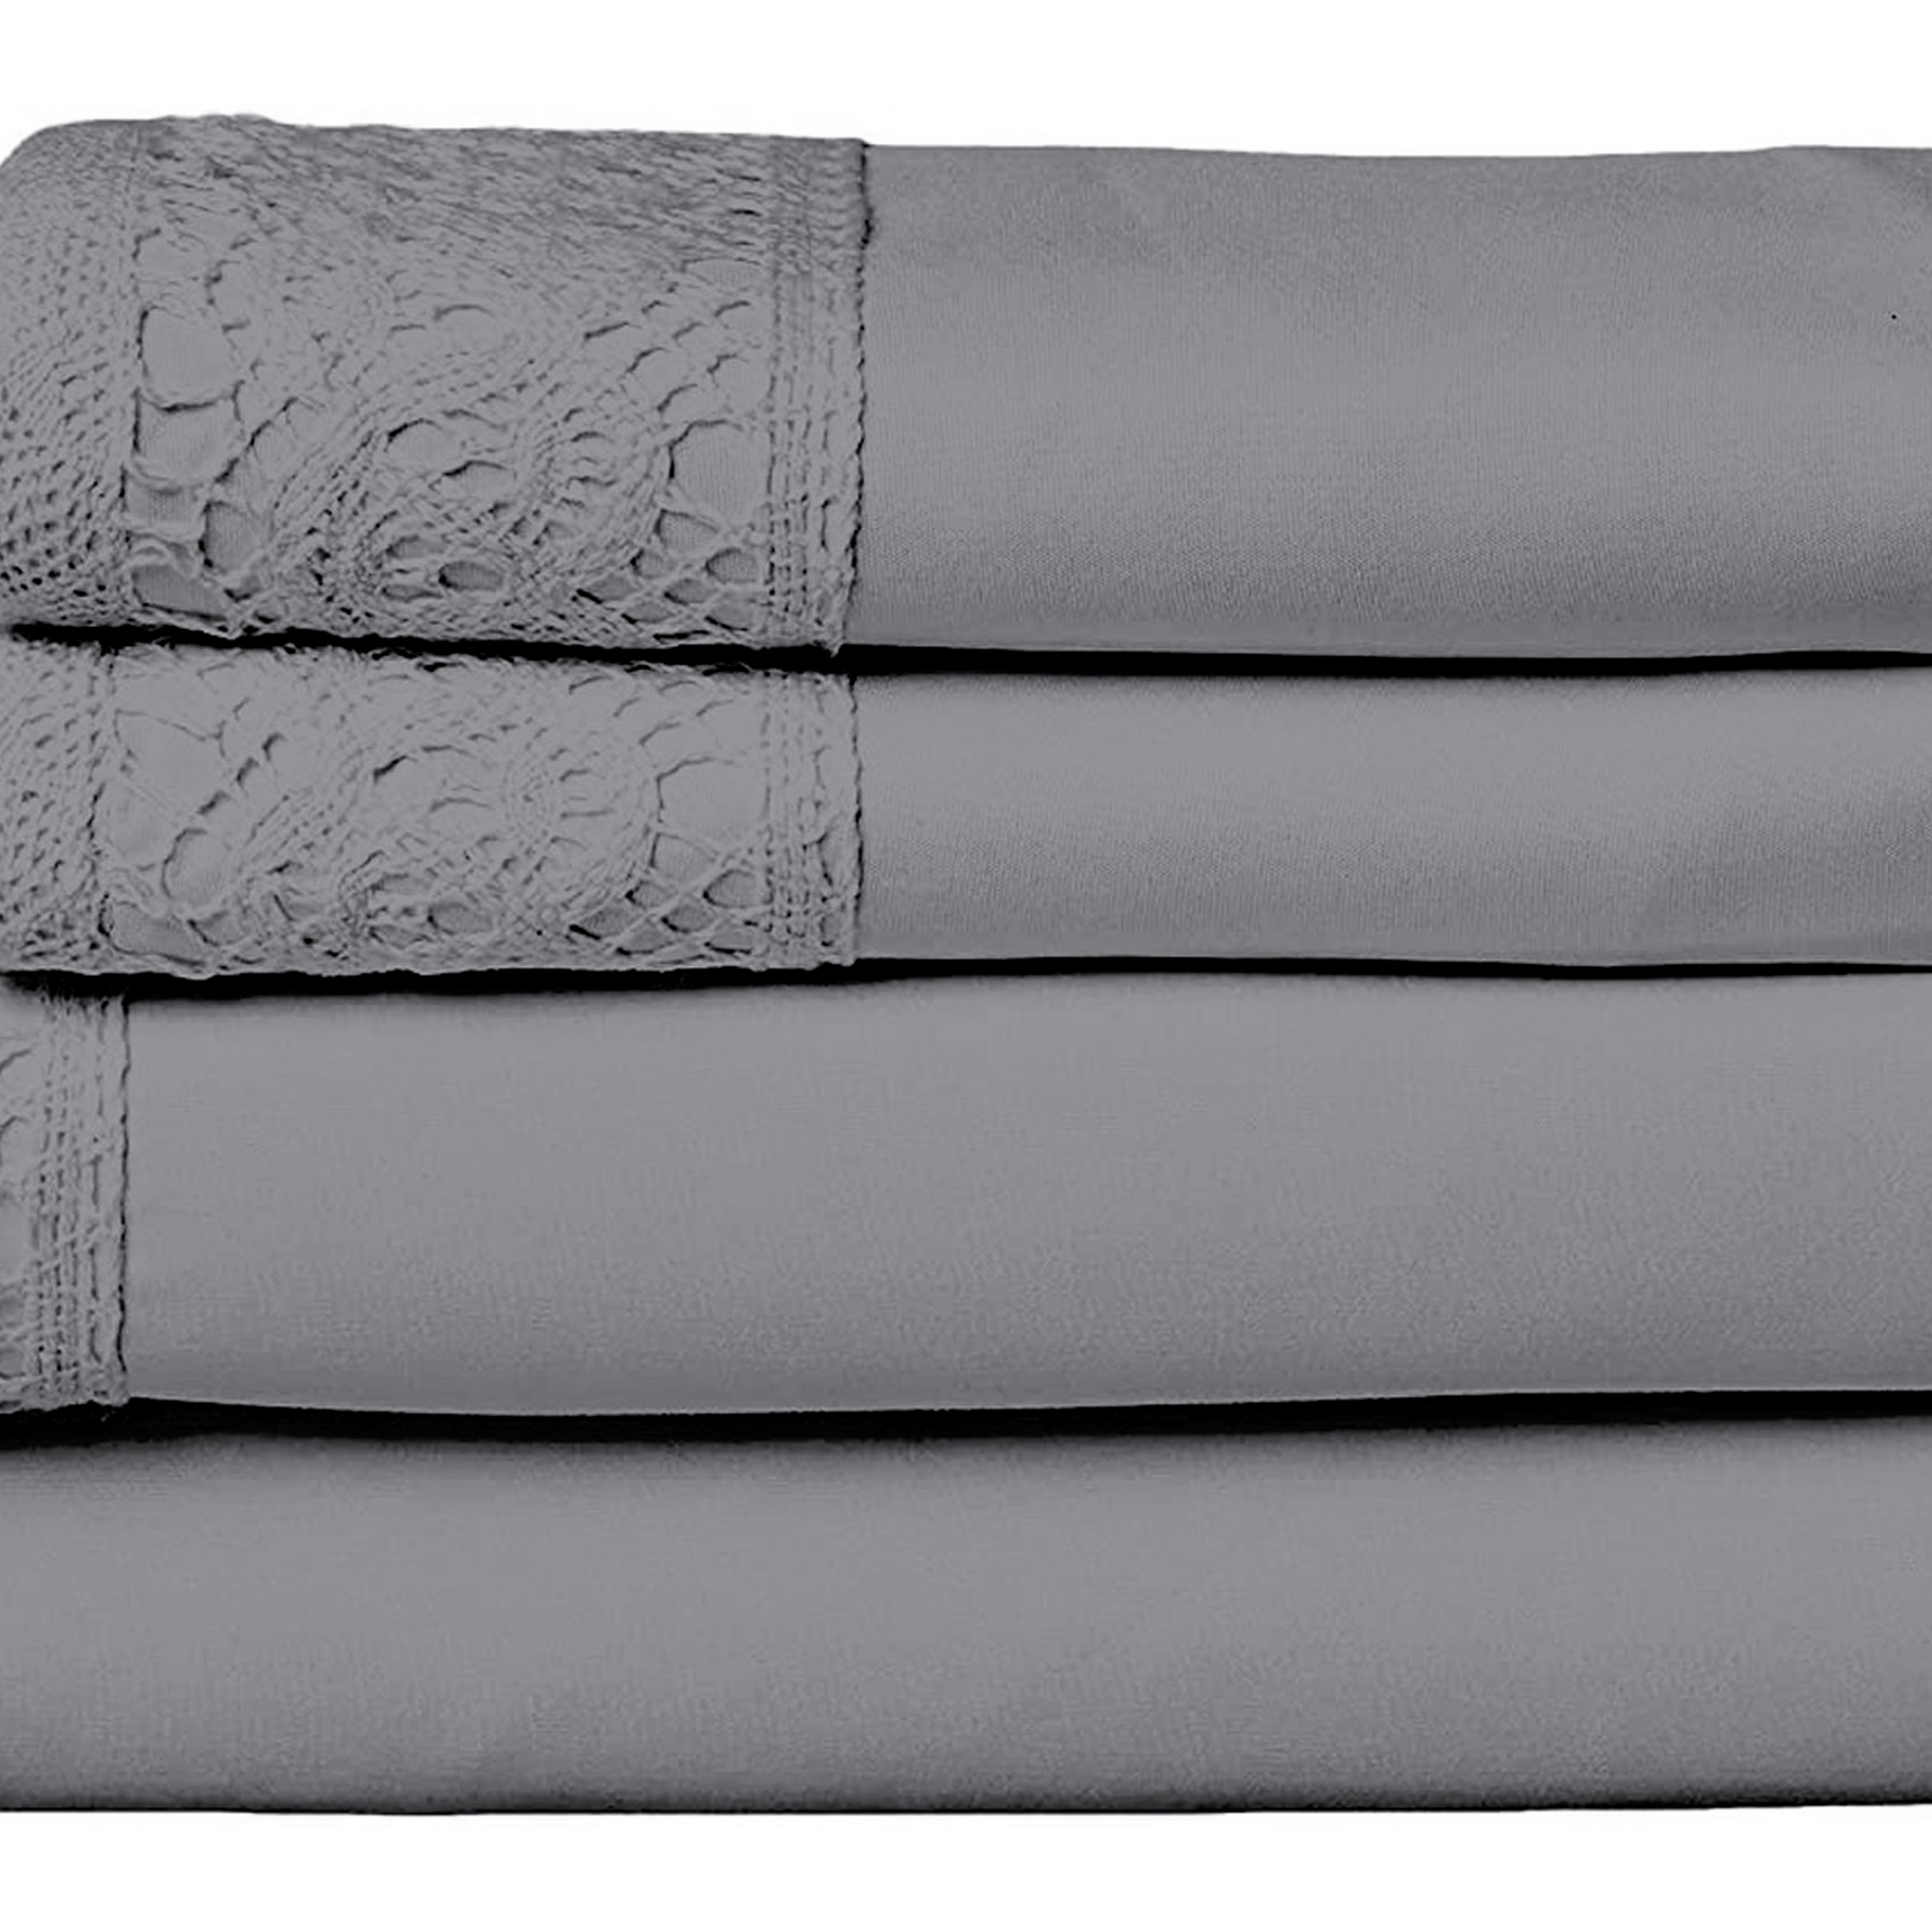 Edra 4 Piece Microfiber Queen Size Bed Sheet Set With Crochet Lace, Gray- Saltoro Sherpi